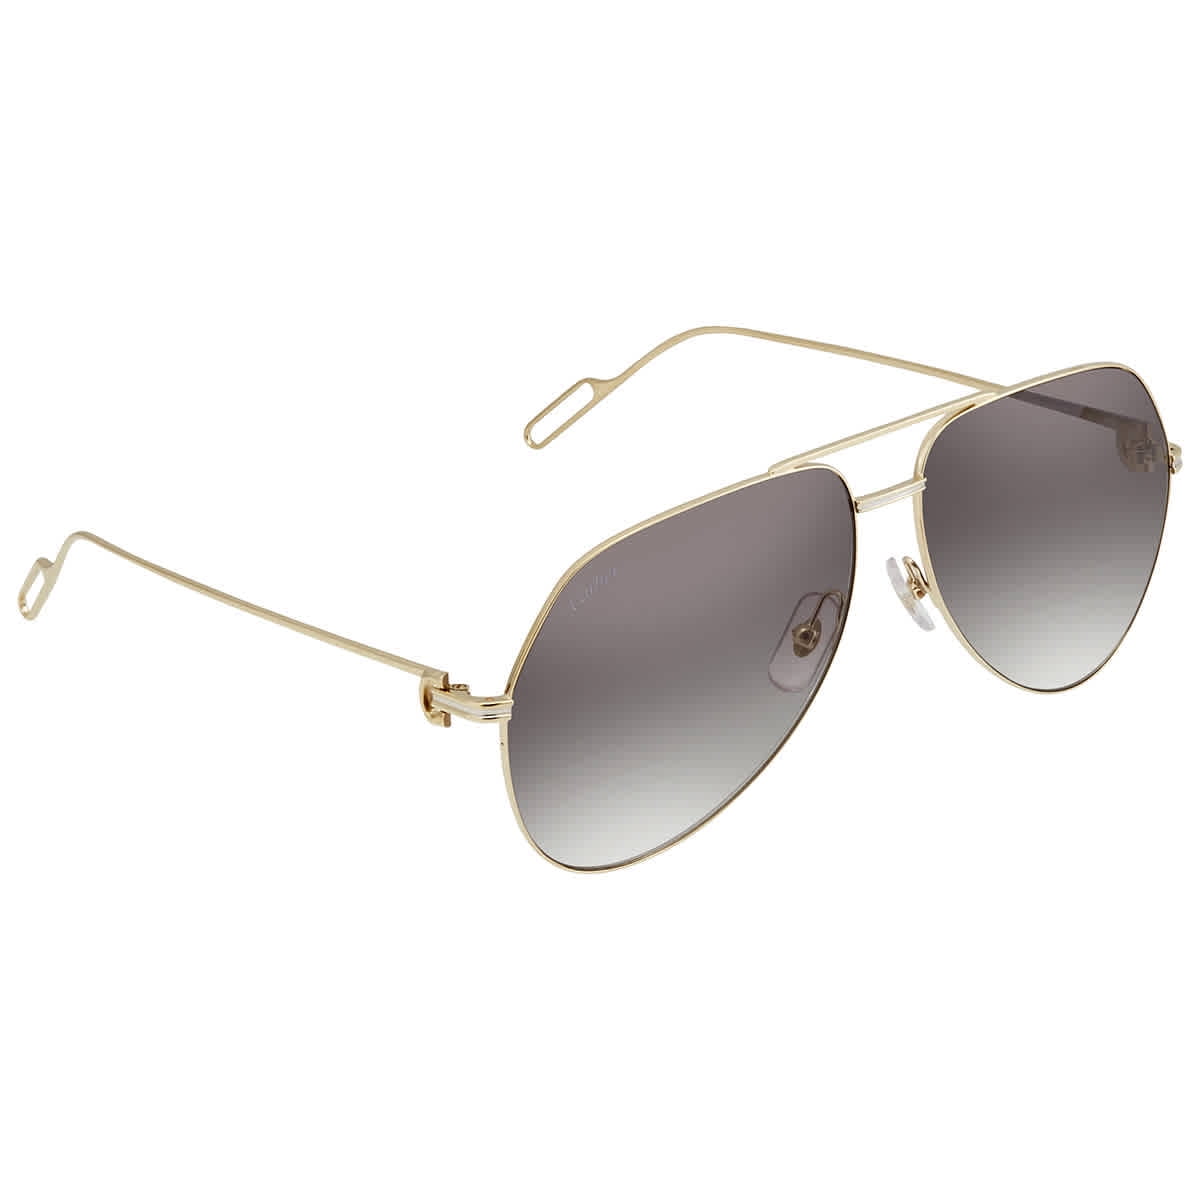 Cartier Men's Sunglasses CT0110S00562 